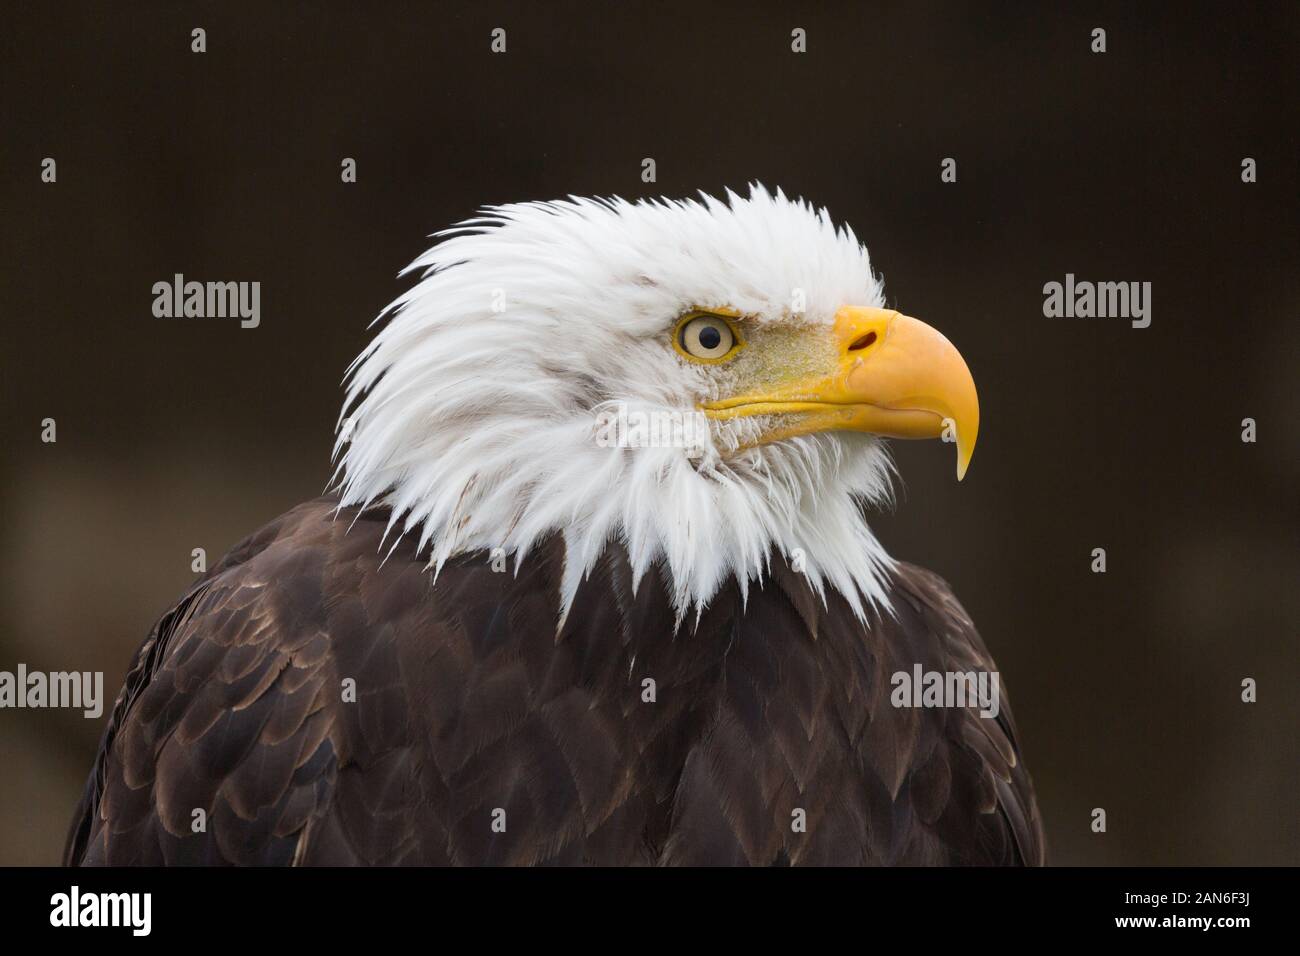 Portrait of bald eagle (haliaeetus leucocephalus). Close-up of white head with orange beak. Facing to the right. National symbol of the USA. Stock Photo